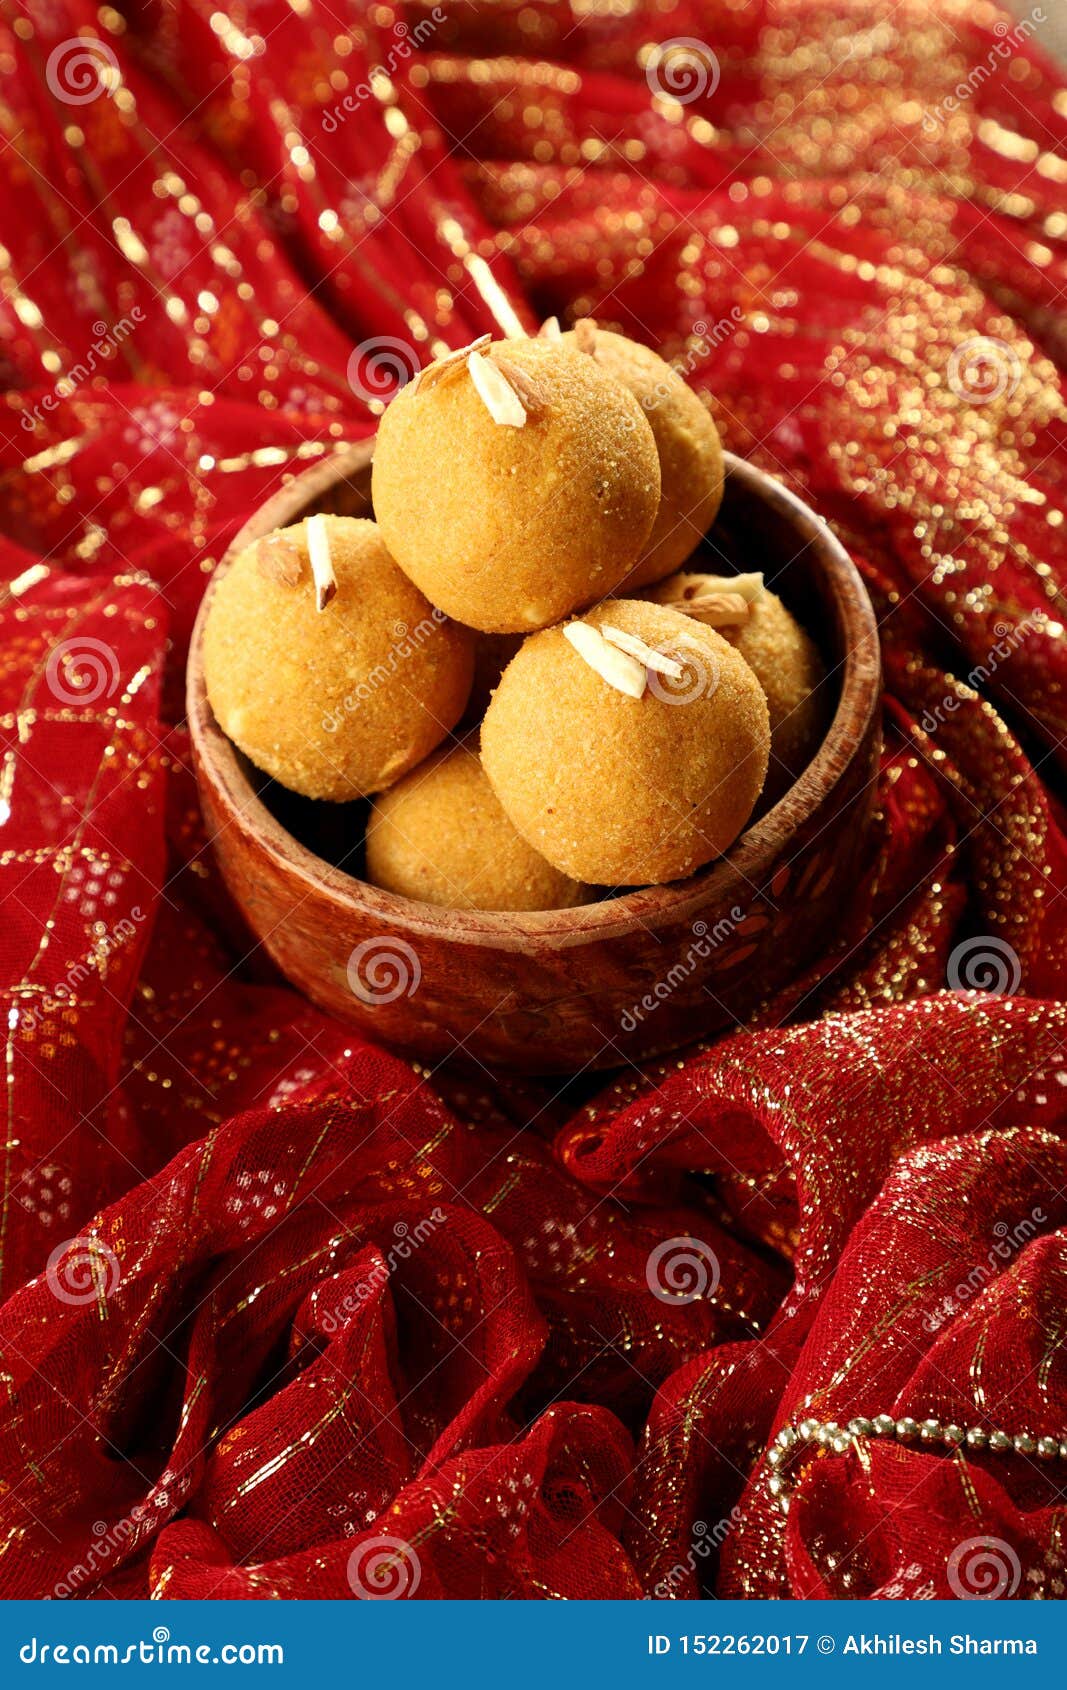 Traditional Indian Sweet - Besan Ke Laddu Stock Image - Image of ...